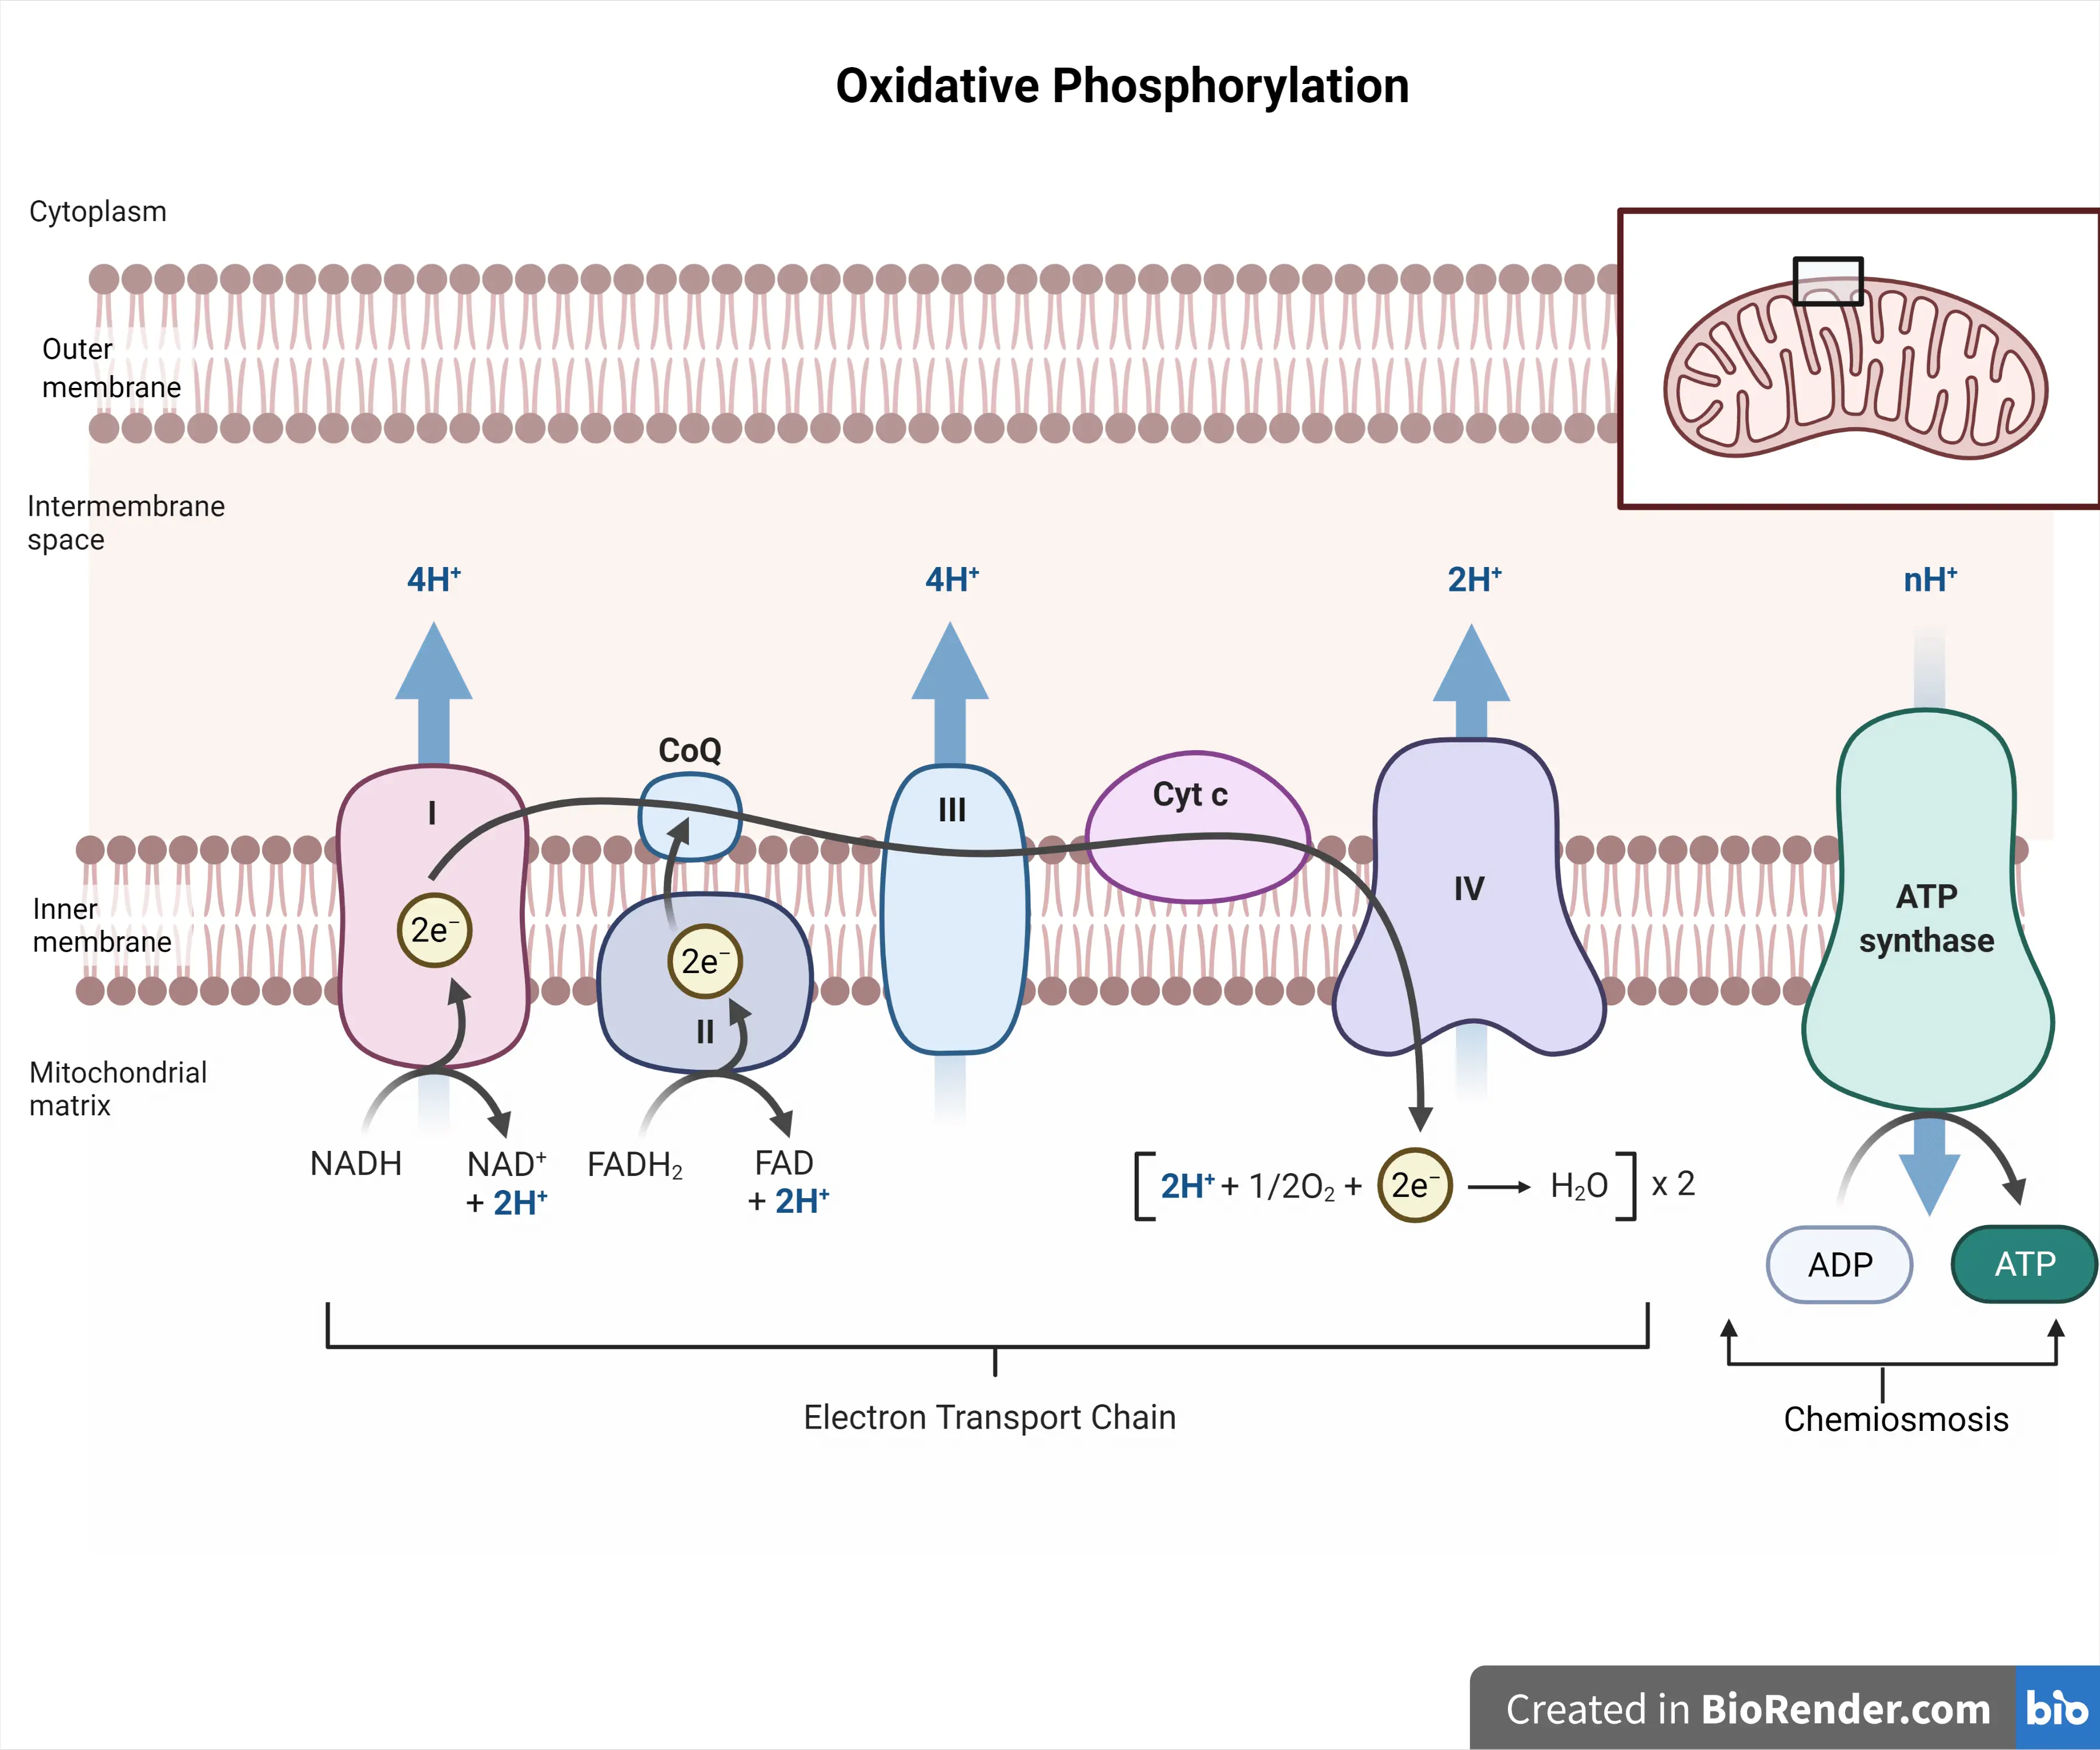 Oxidative Phosphorylation: Mechanism and Regulation